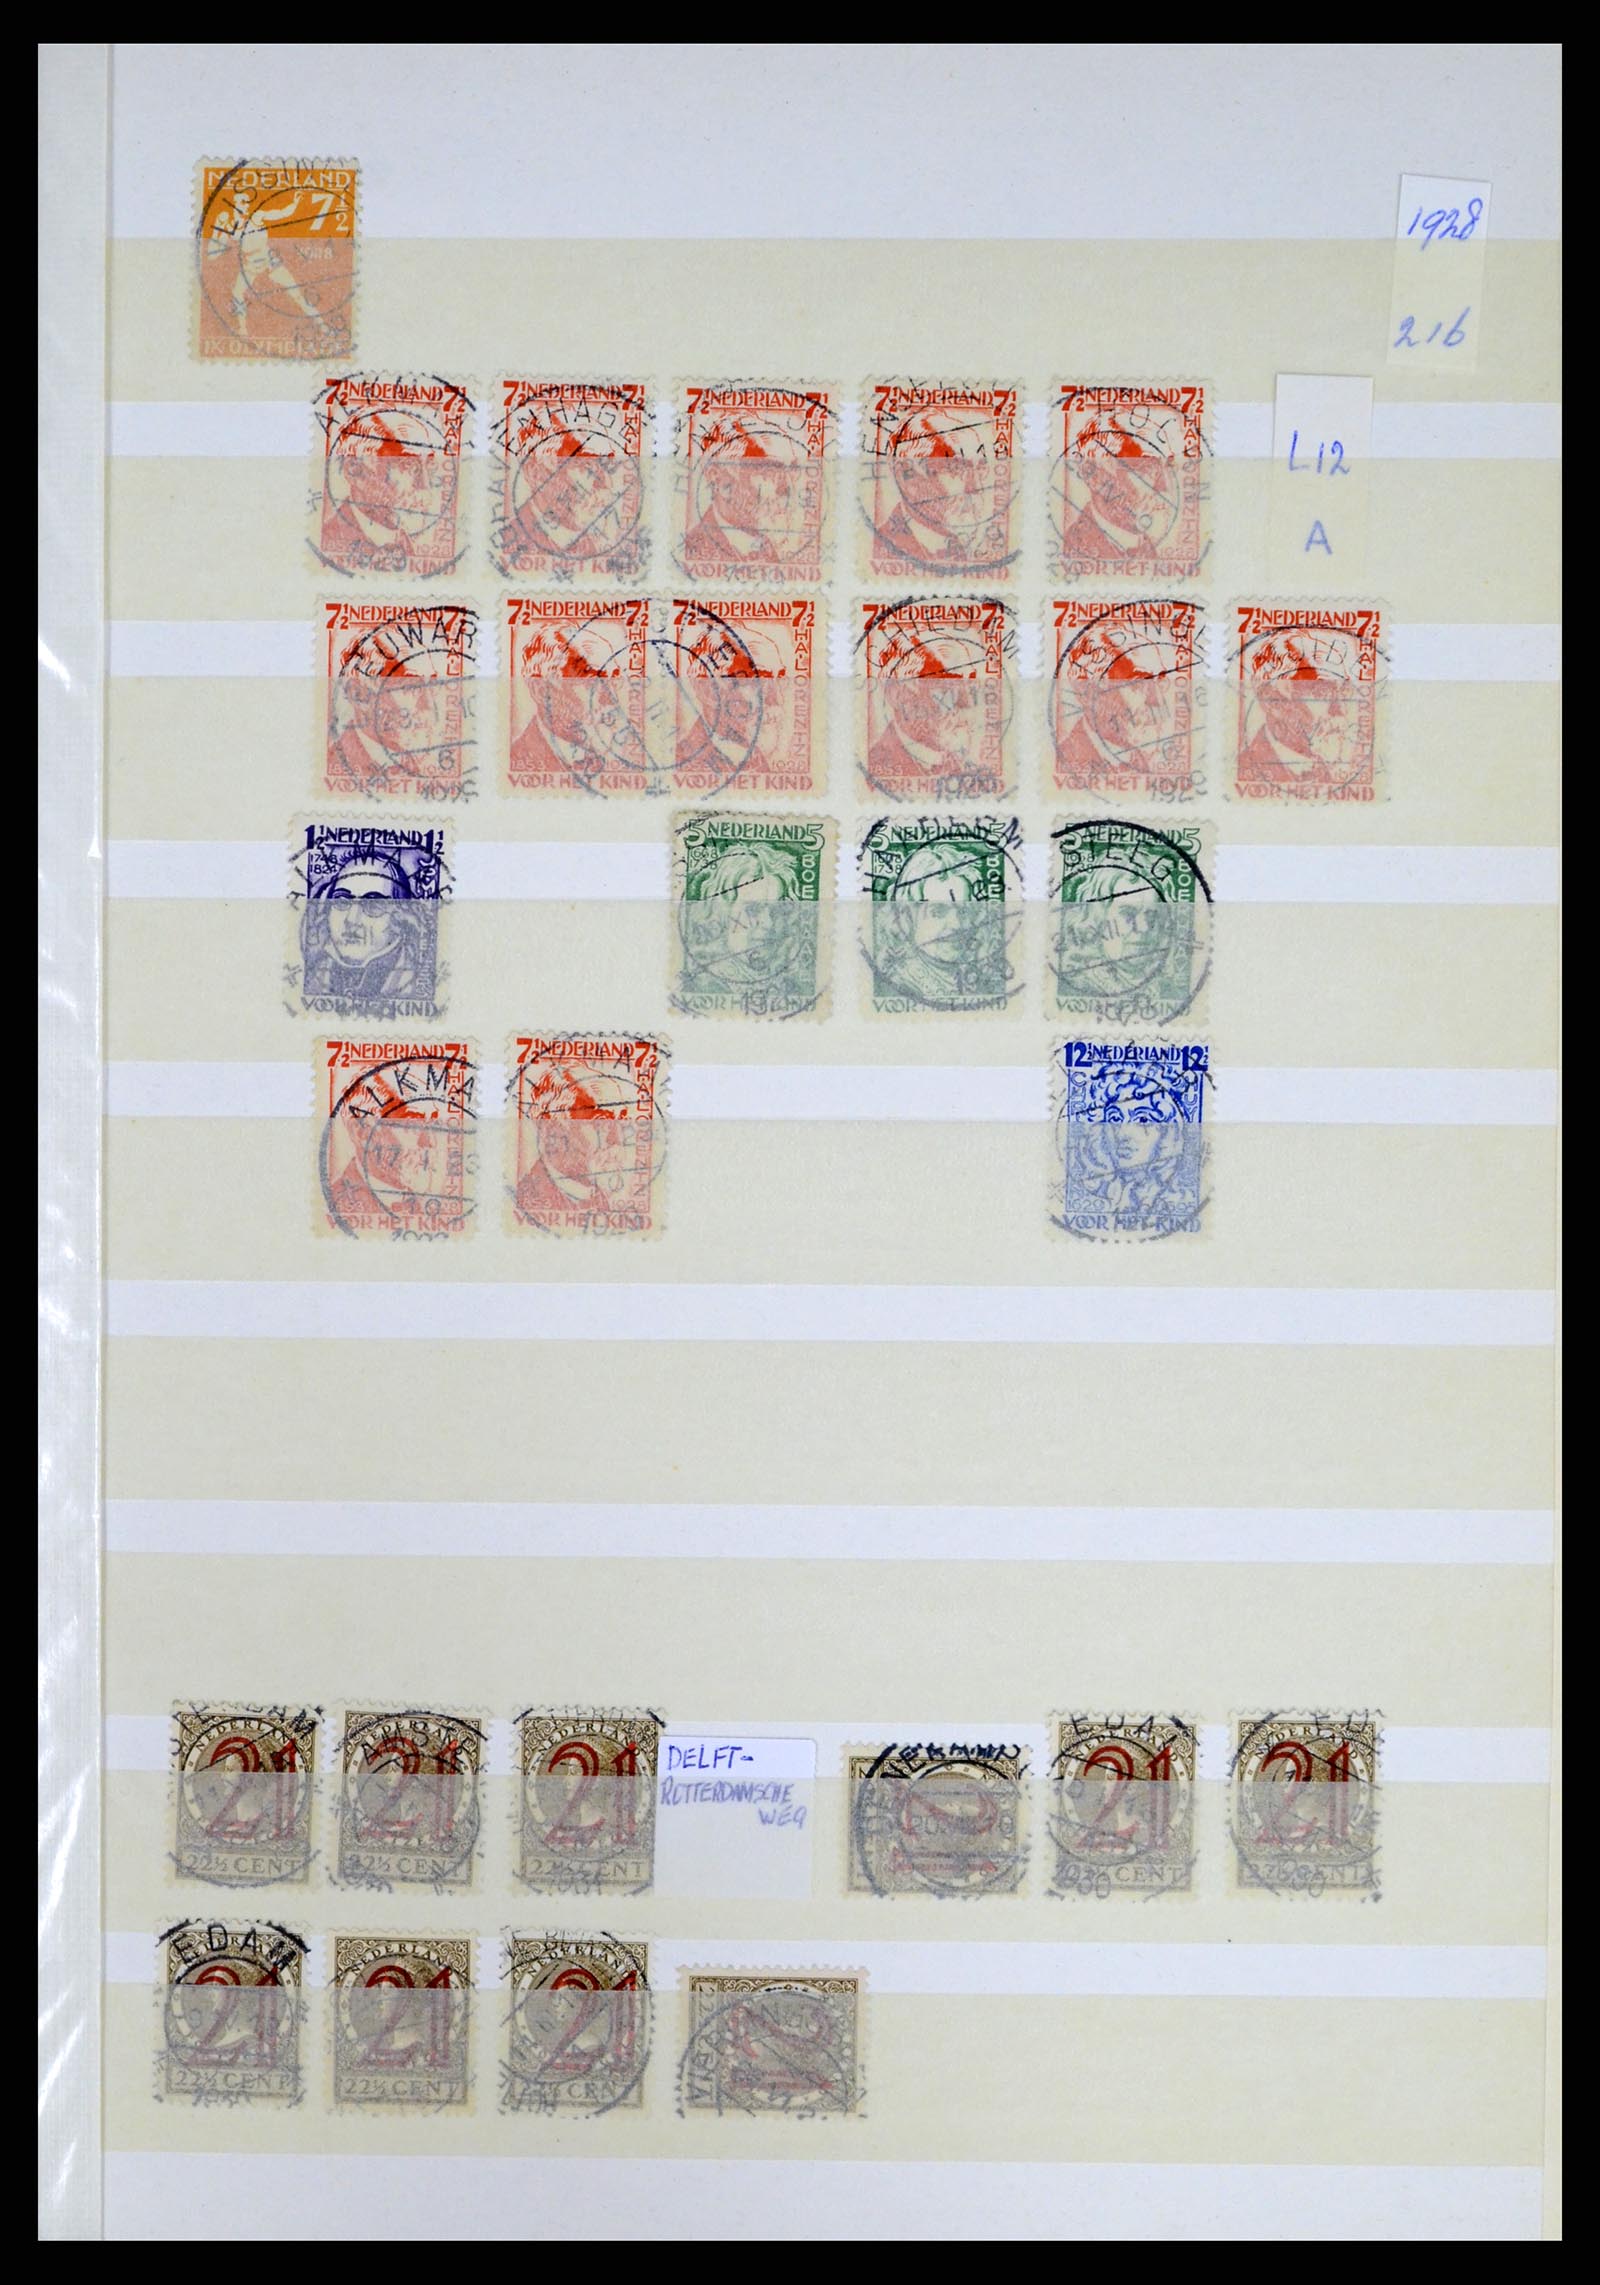 37424 013 - Stamp collection 37424 Netherlands shortbar cancels.